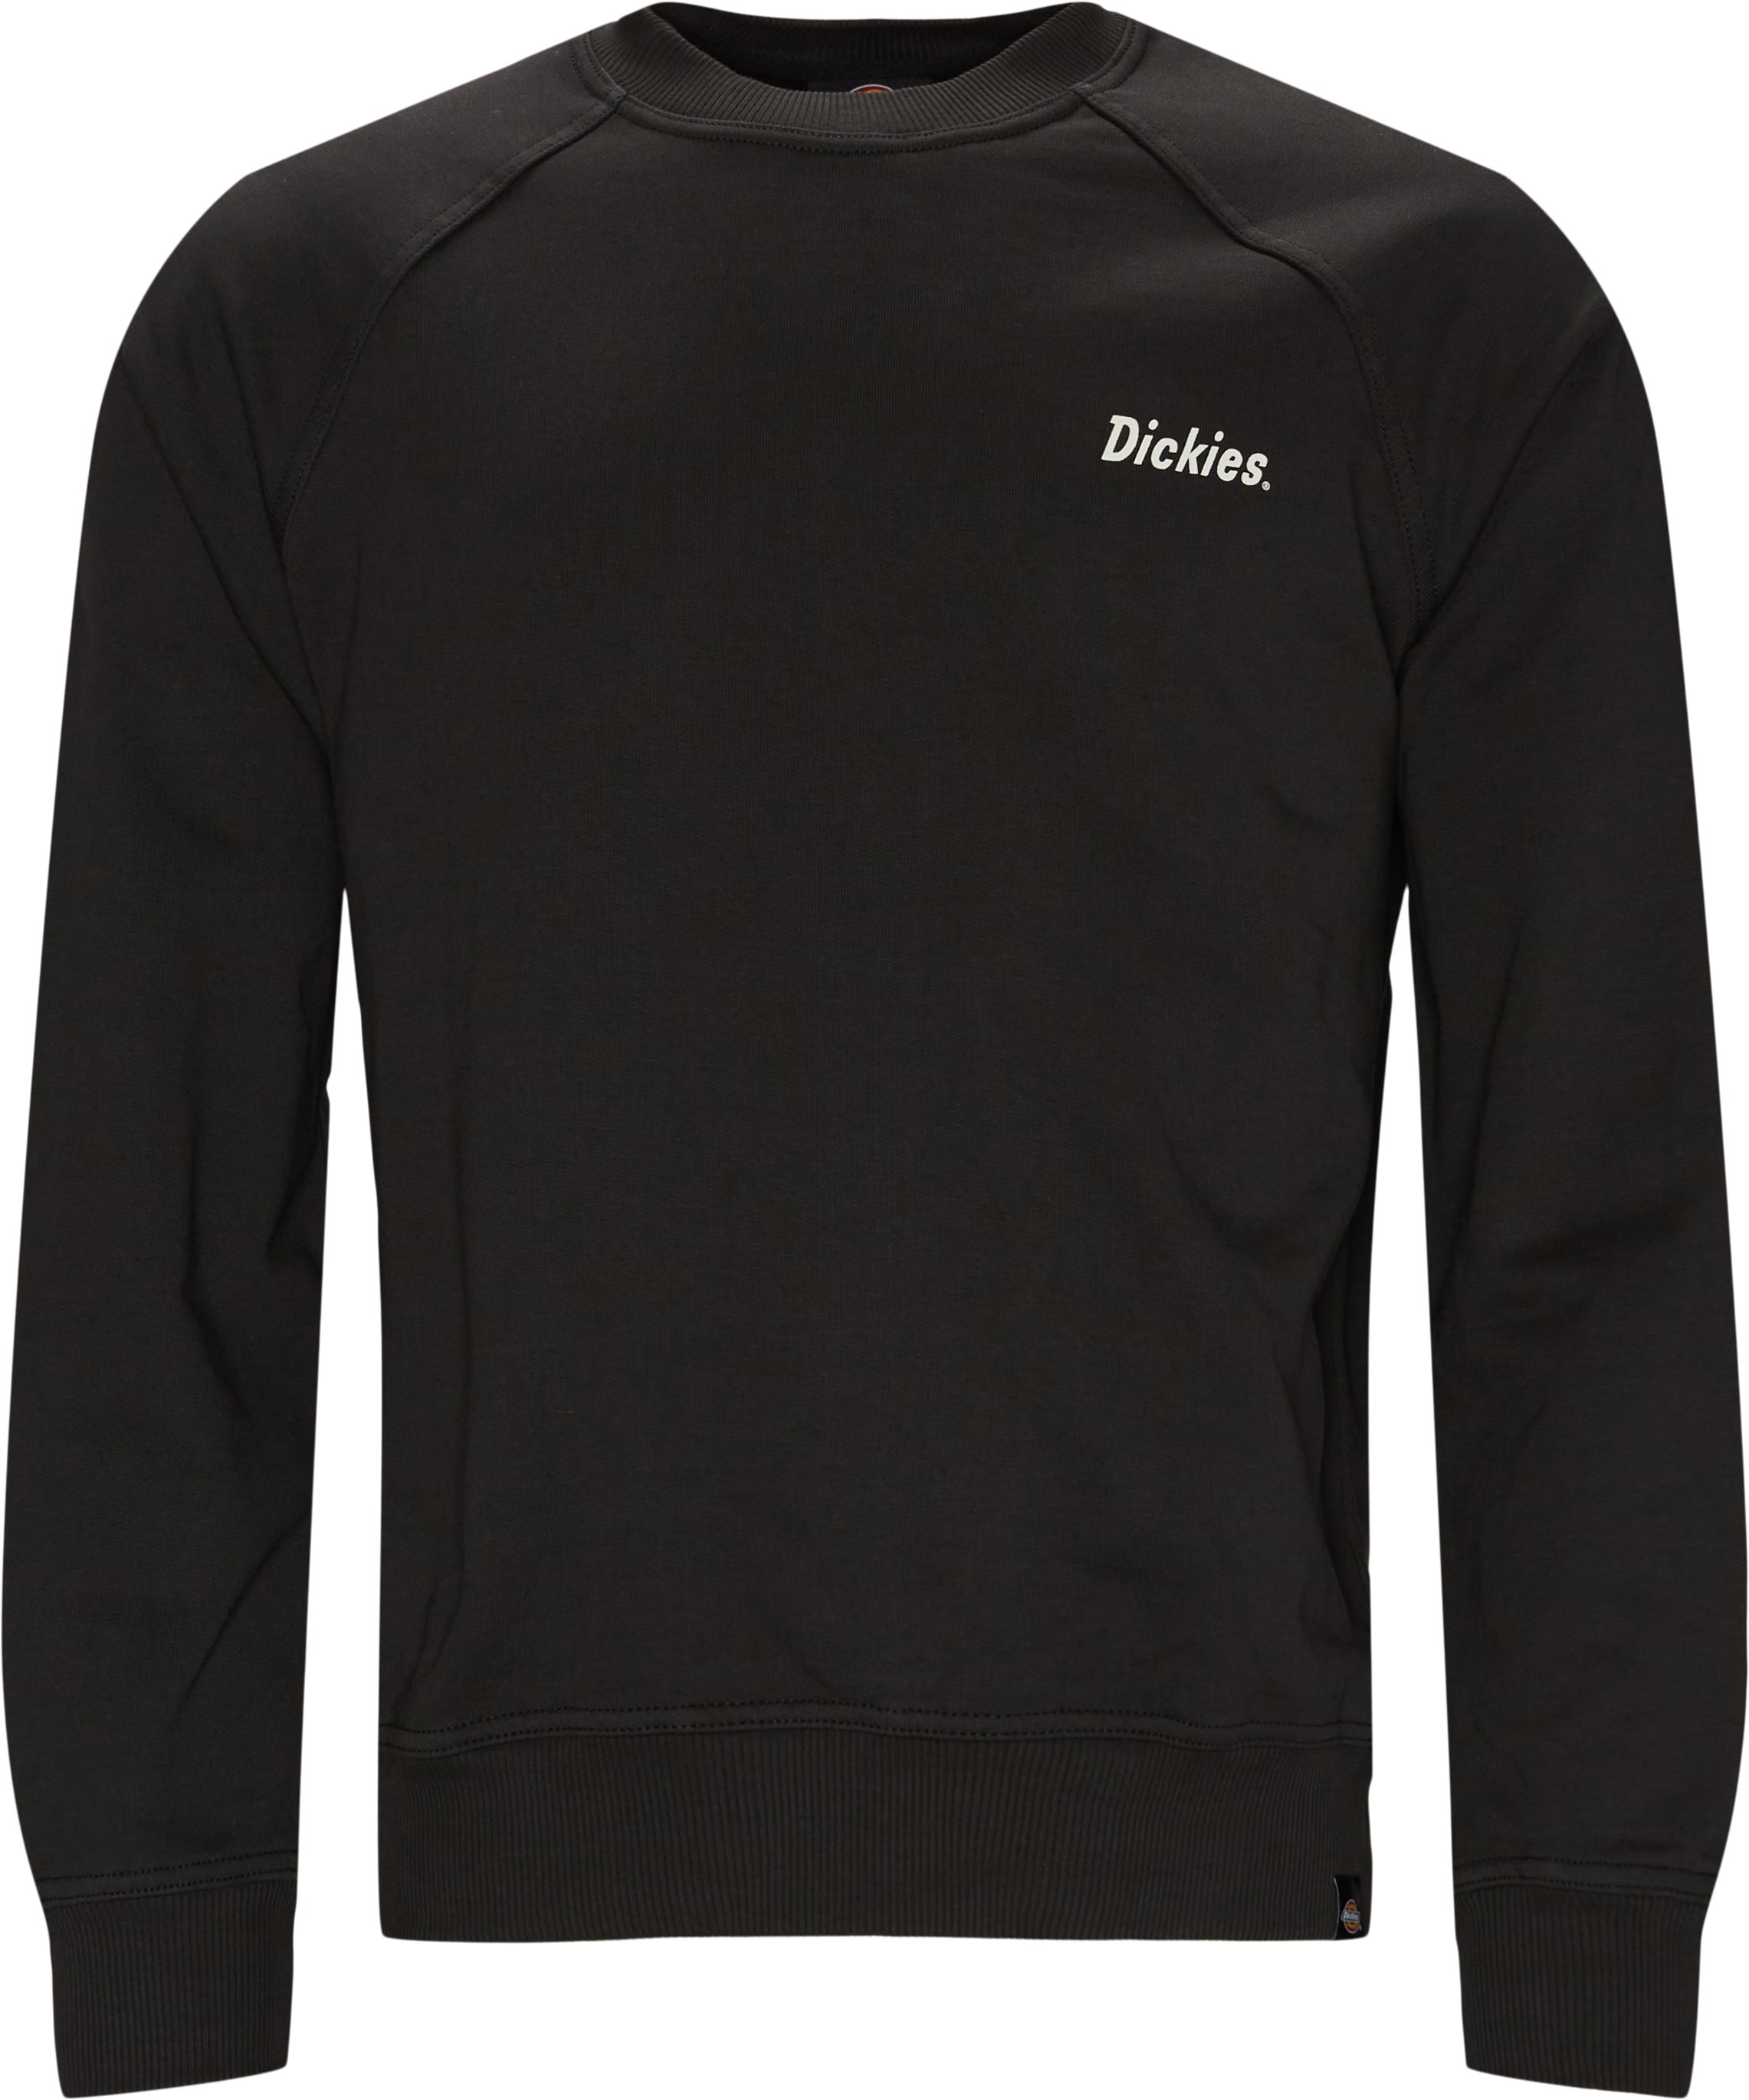 Bettles Crewneck Sweatshirt - Sweatshirts - Regular fit - Black